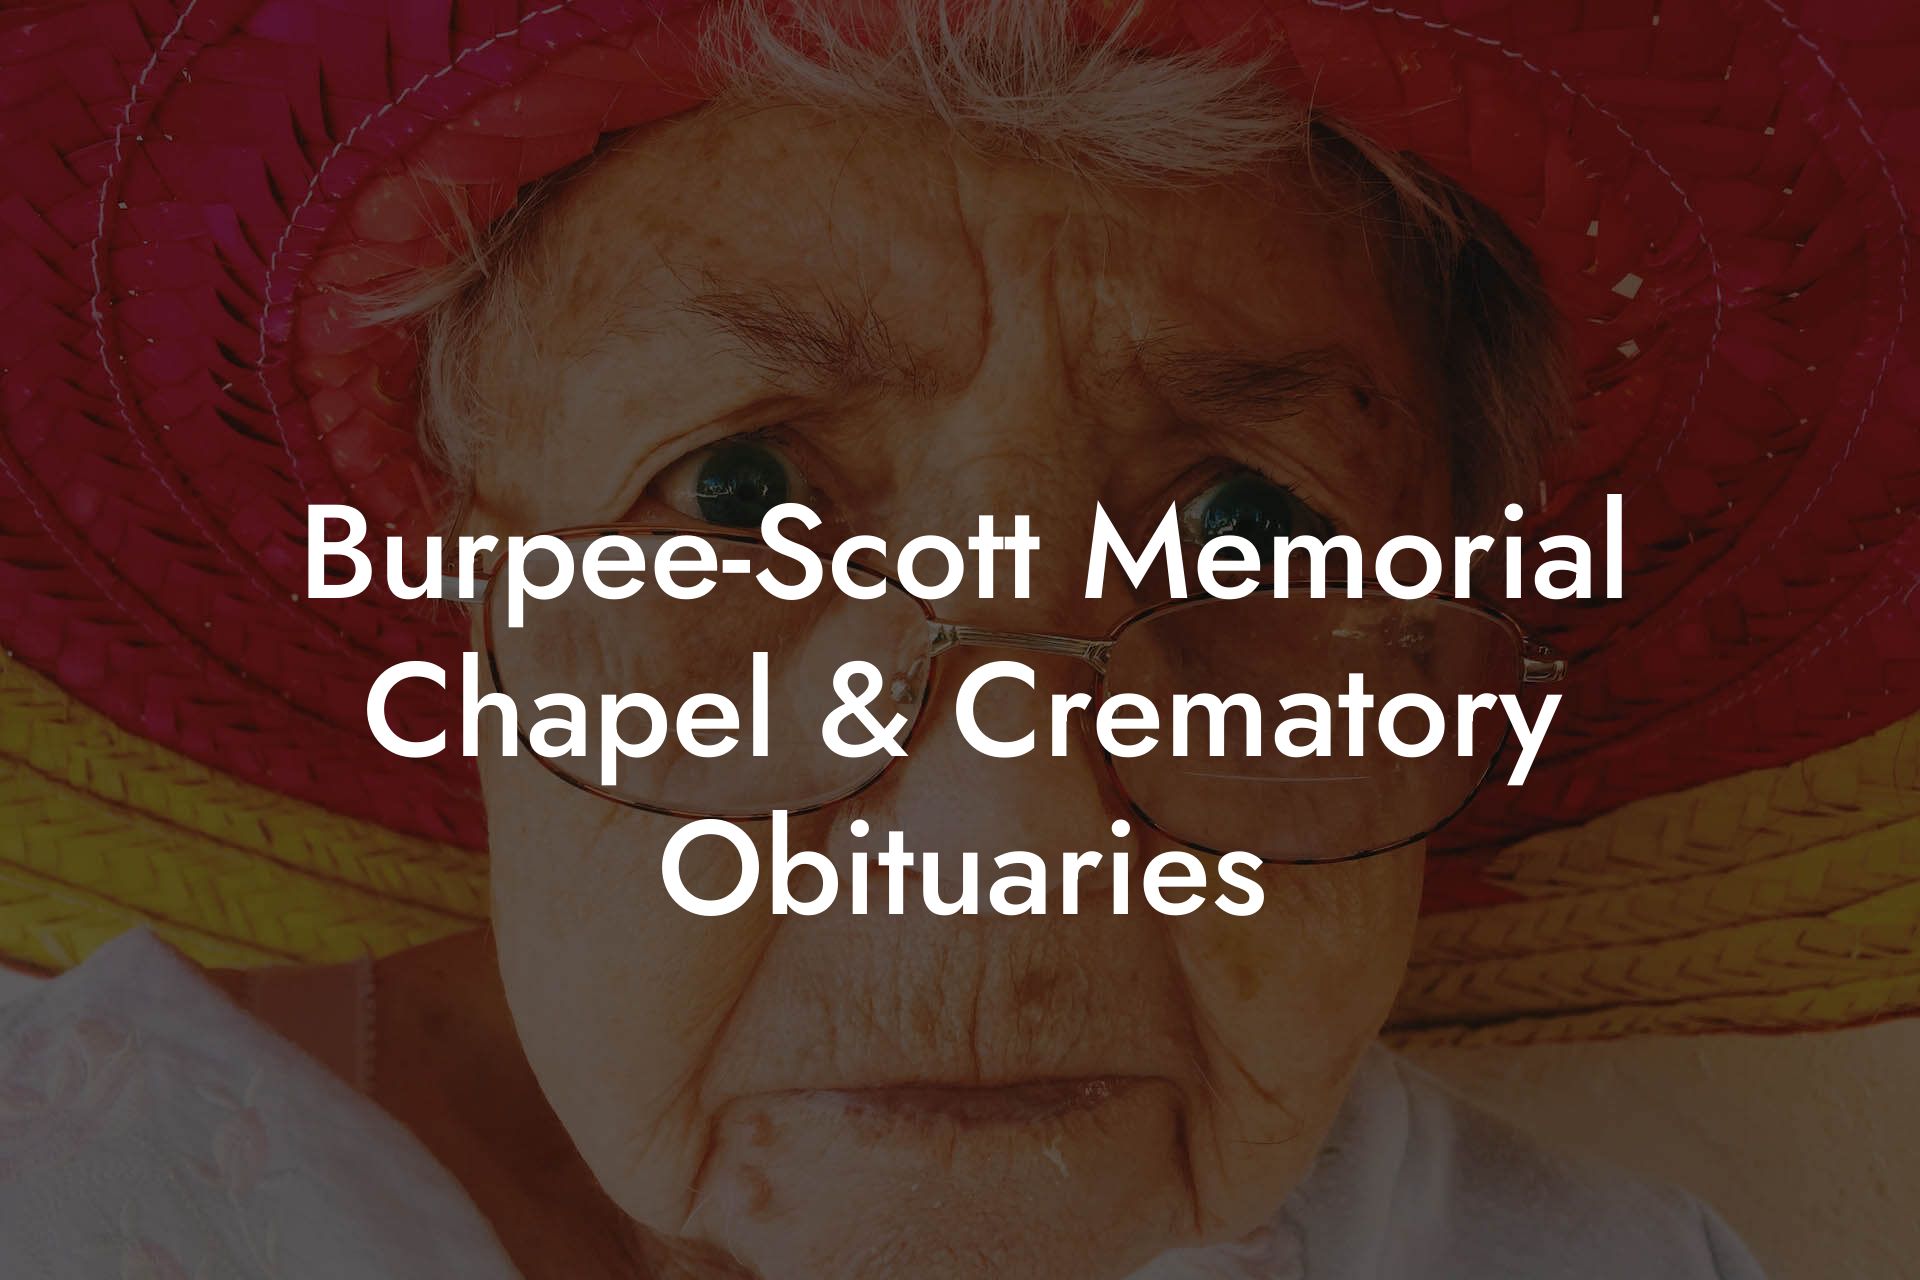 Burpee-Scott Memorial Chapel & Crematory Obituaries